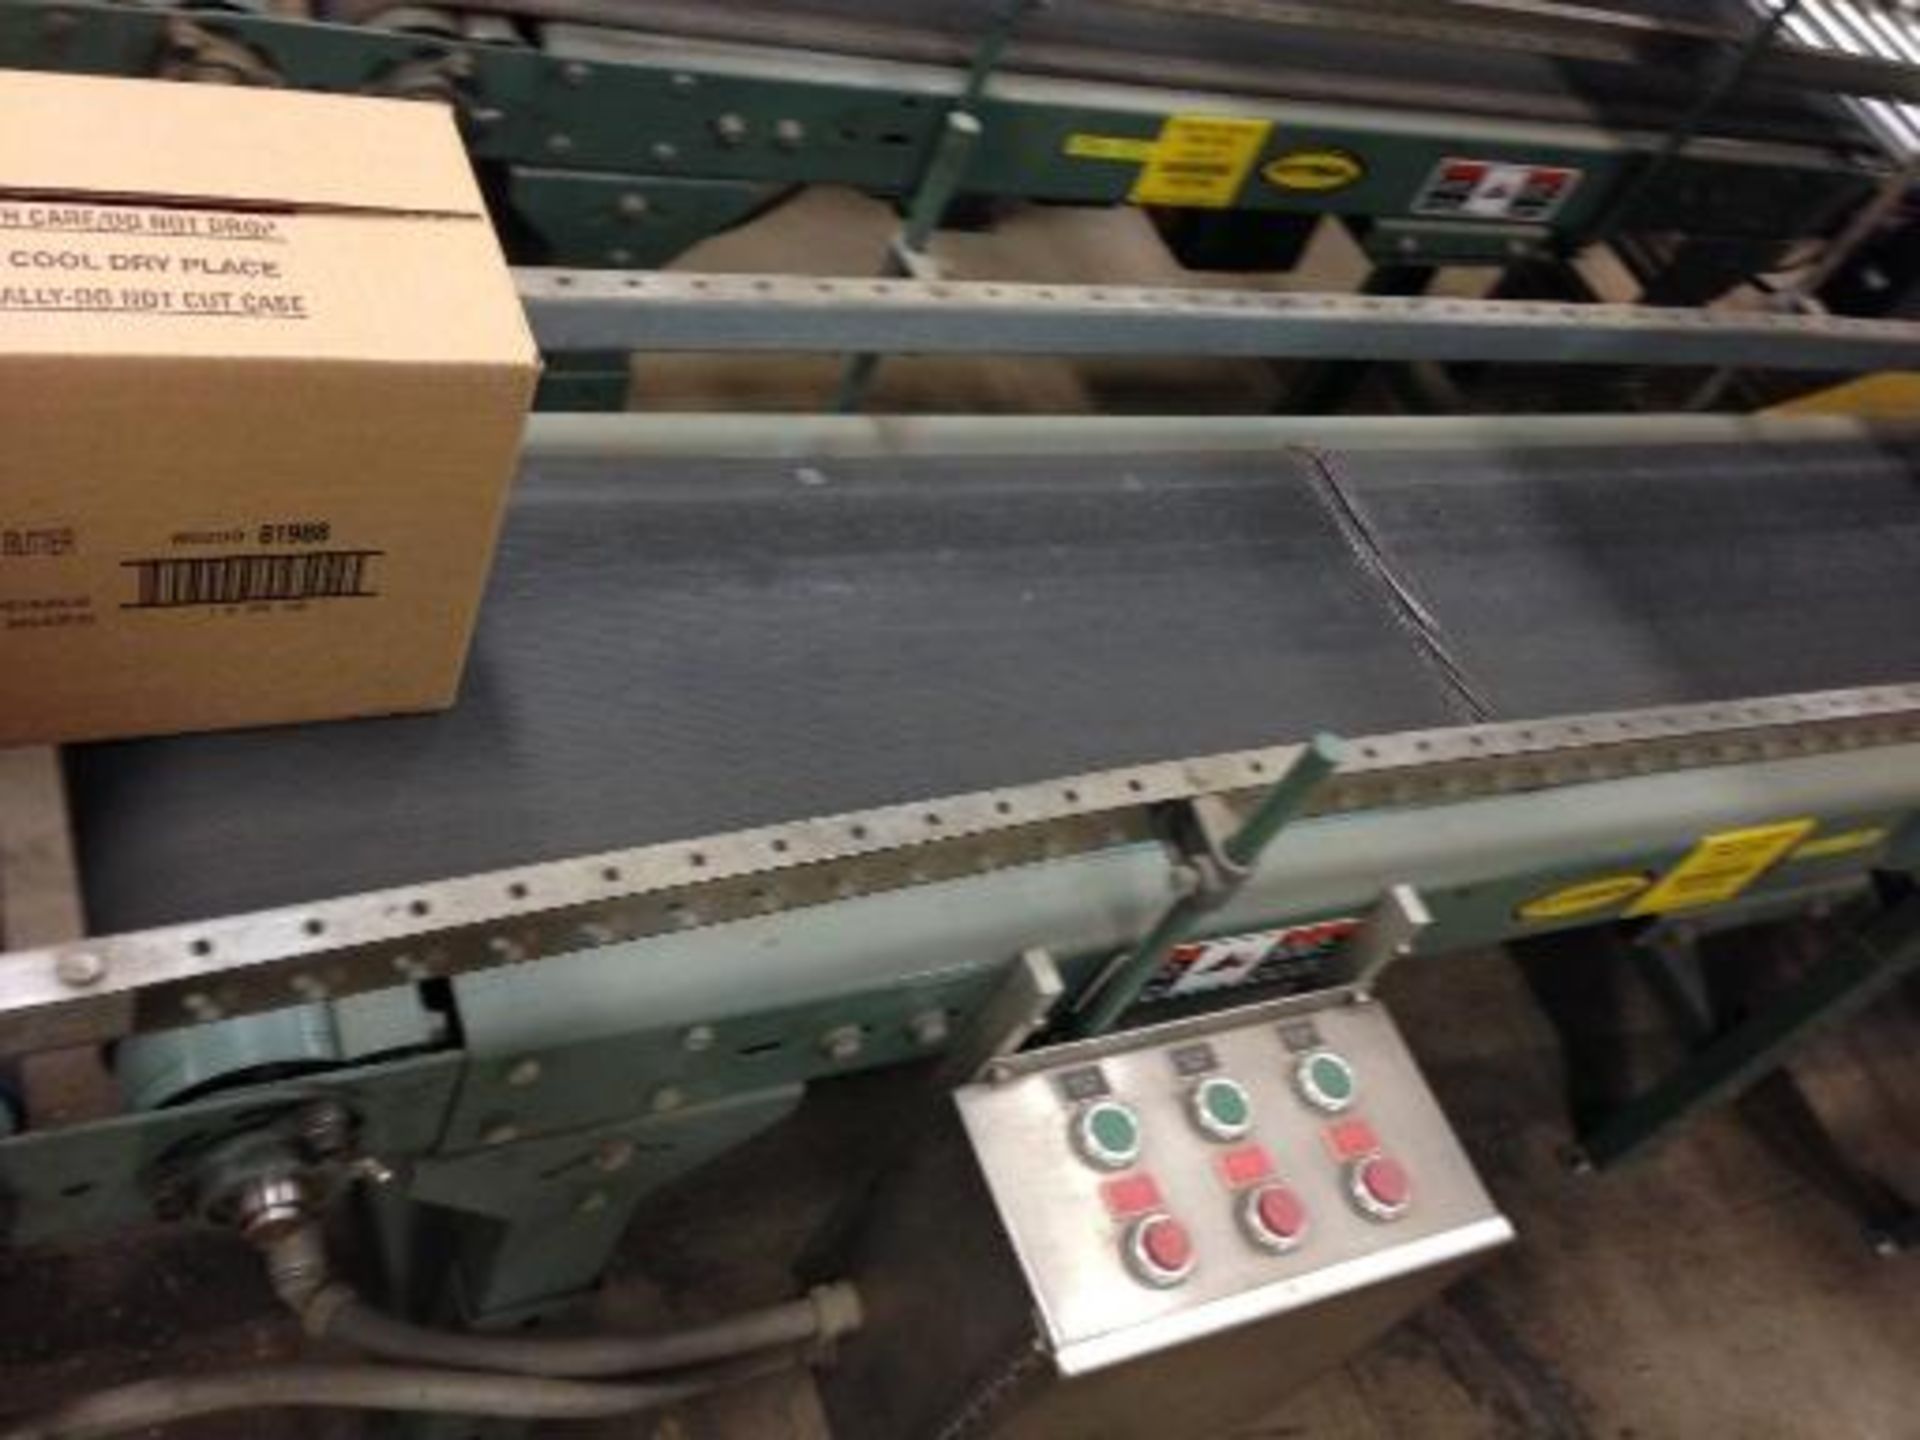 Hytrol belt conveyor16 inch x 5 feet long. Located in Marion, Ohio Rigging Fee: $200 - Image 2 of 3